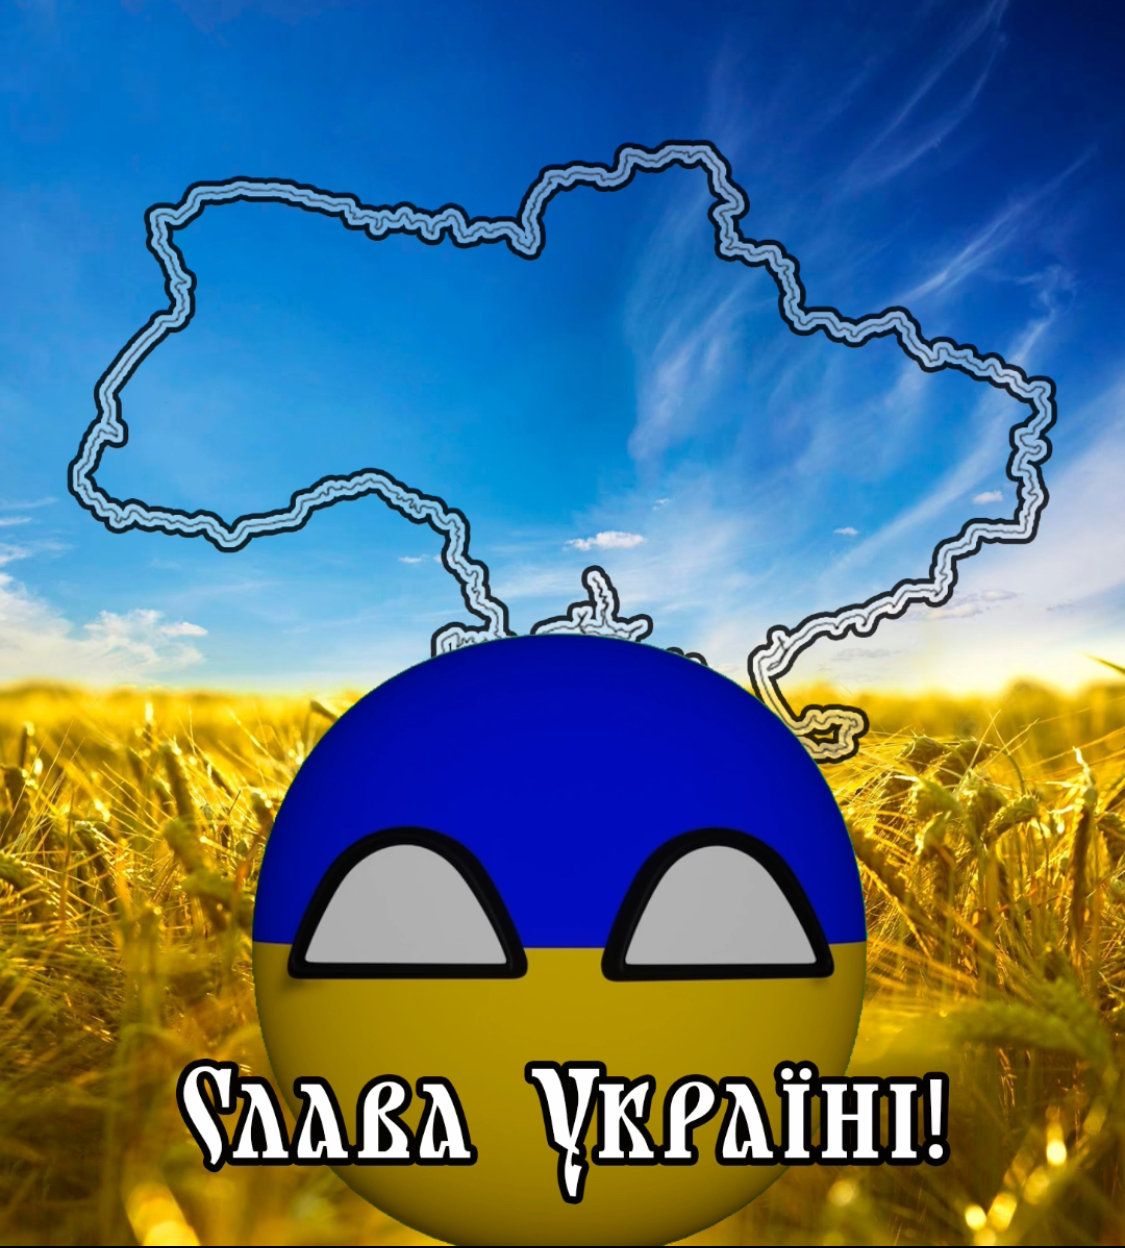 Russia with Ukraine flag map by GeorgianPatriot on DeviantArt